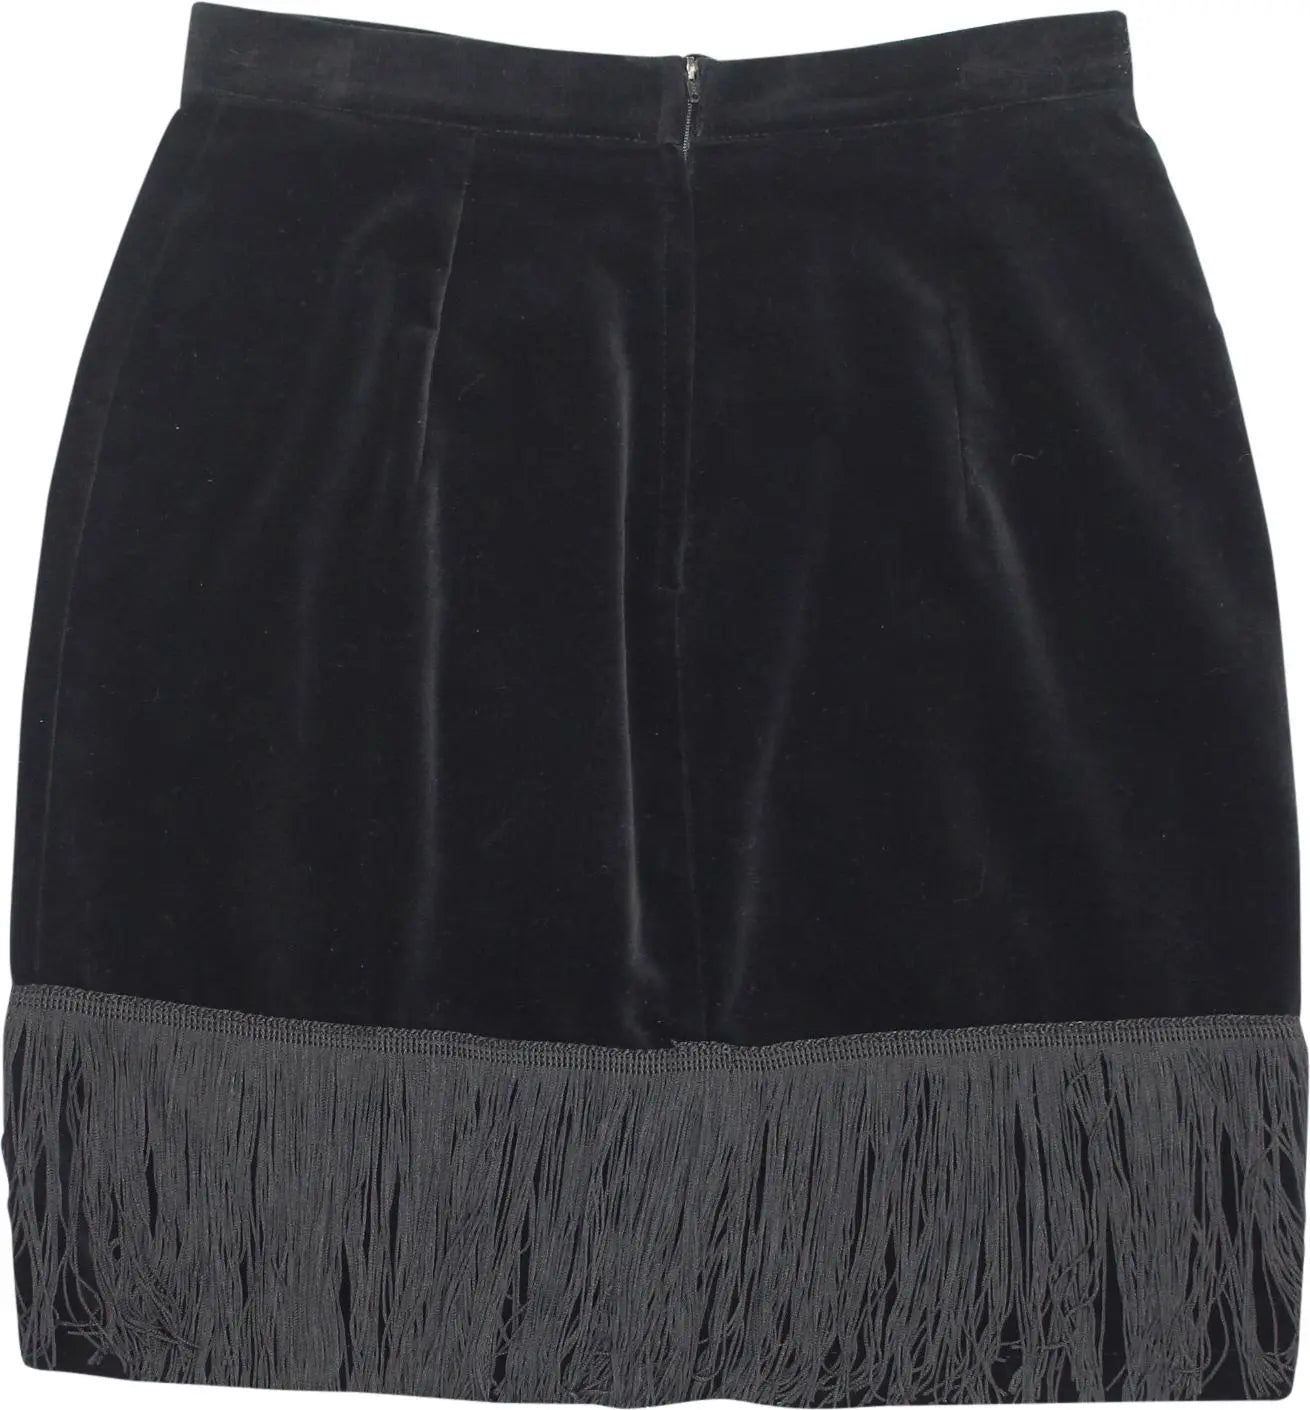 Unknown - Velvet Fringe Skirt- ThriftTale.com - Vintage and second handclothing